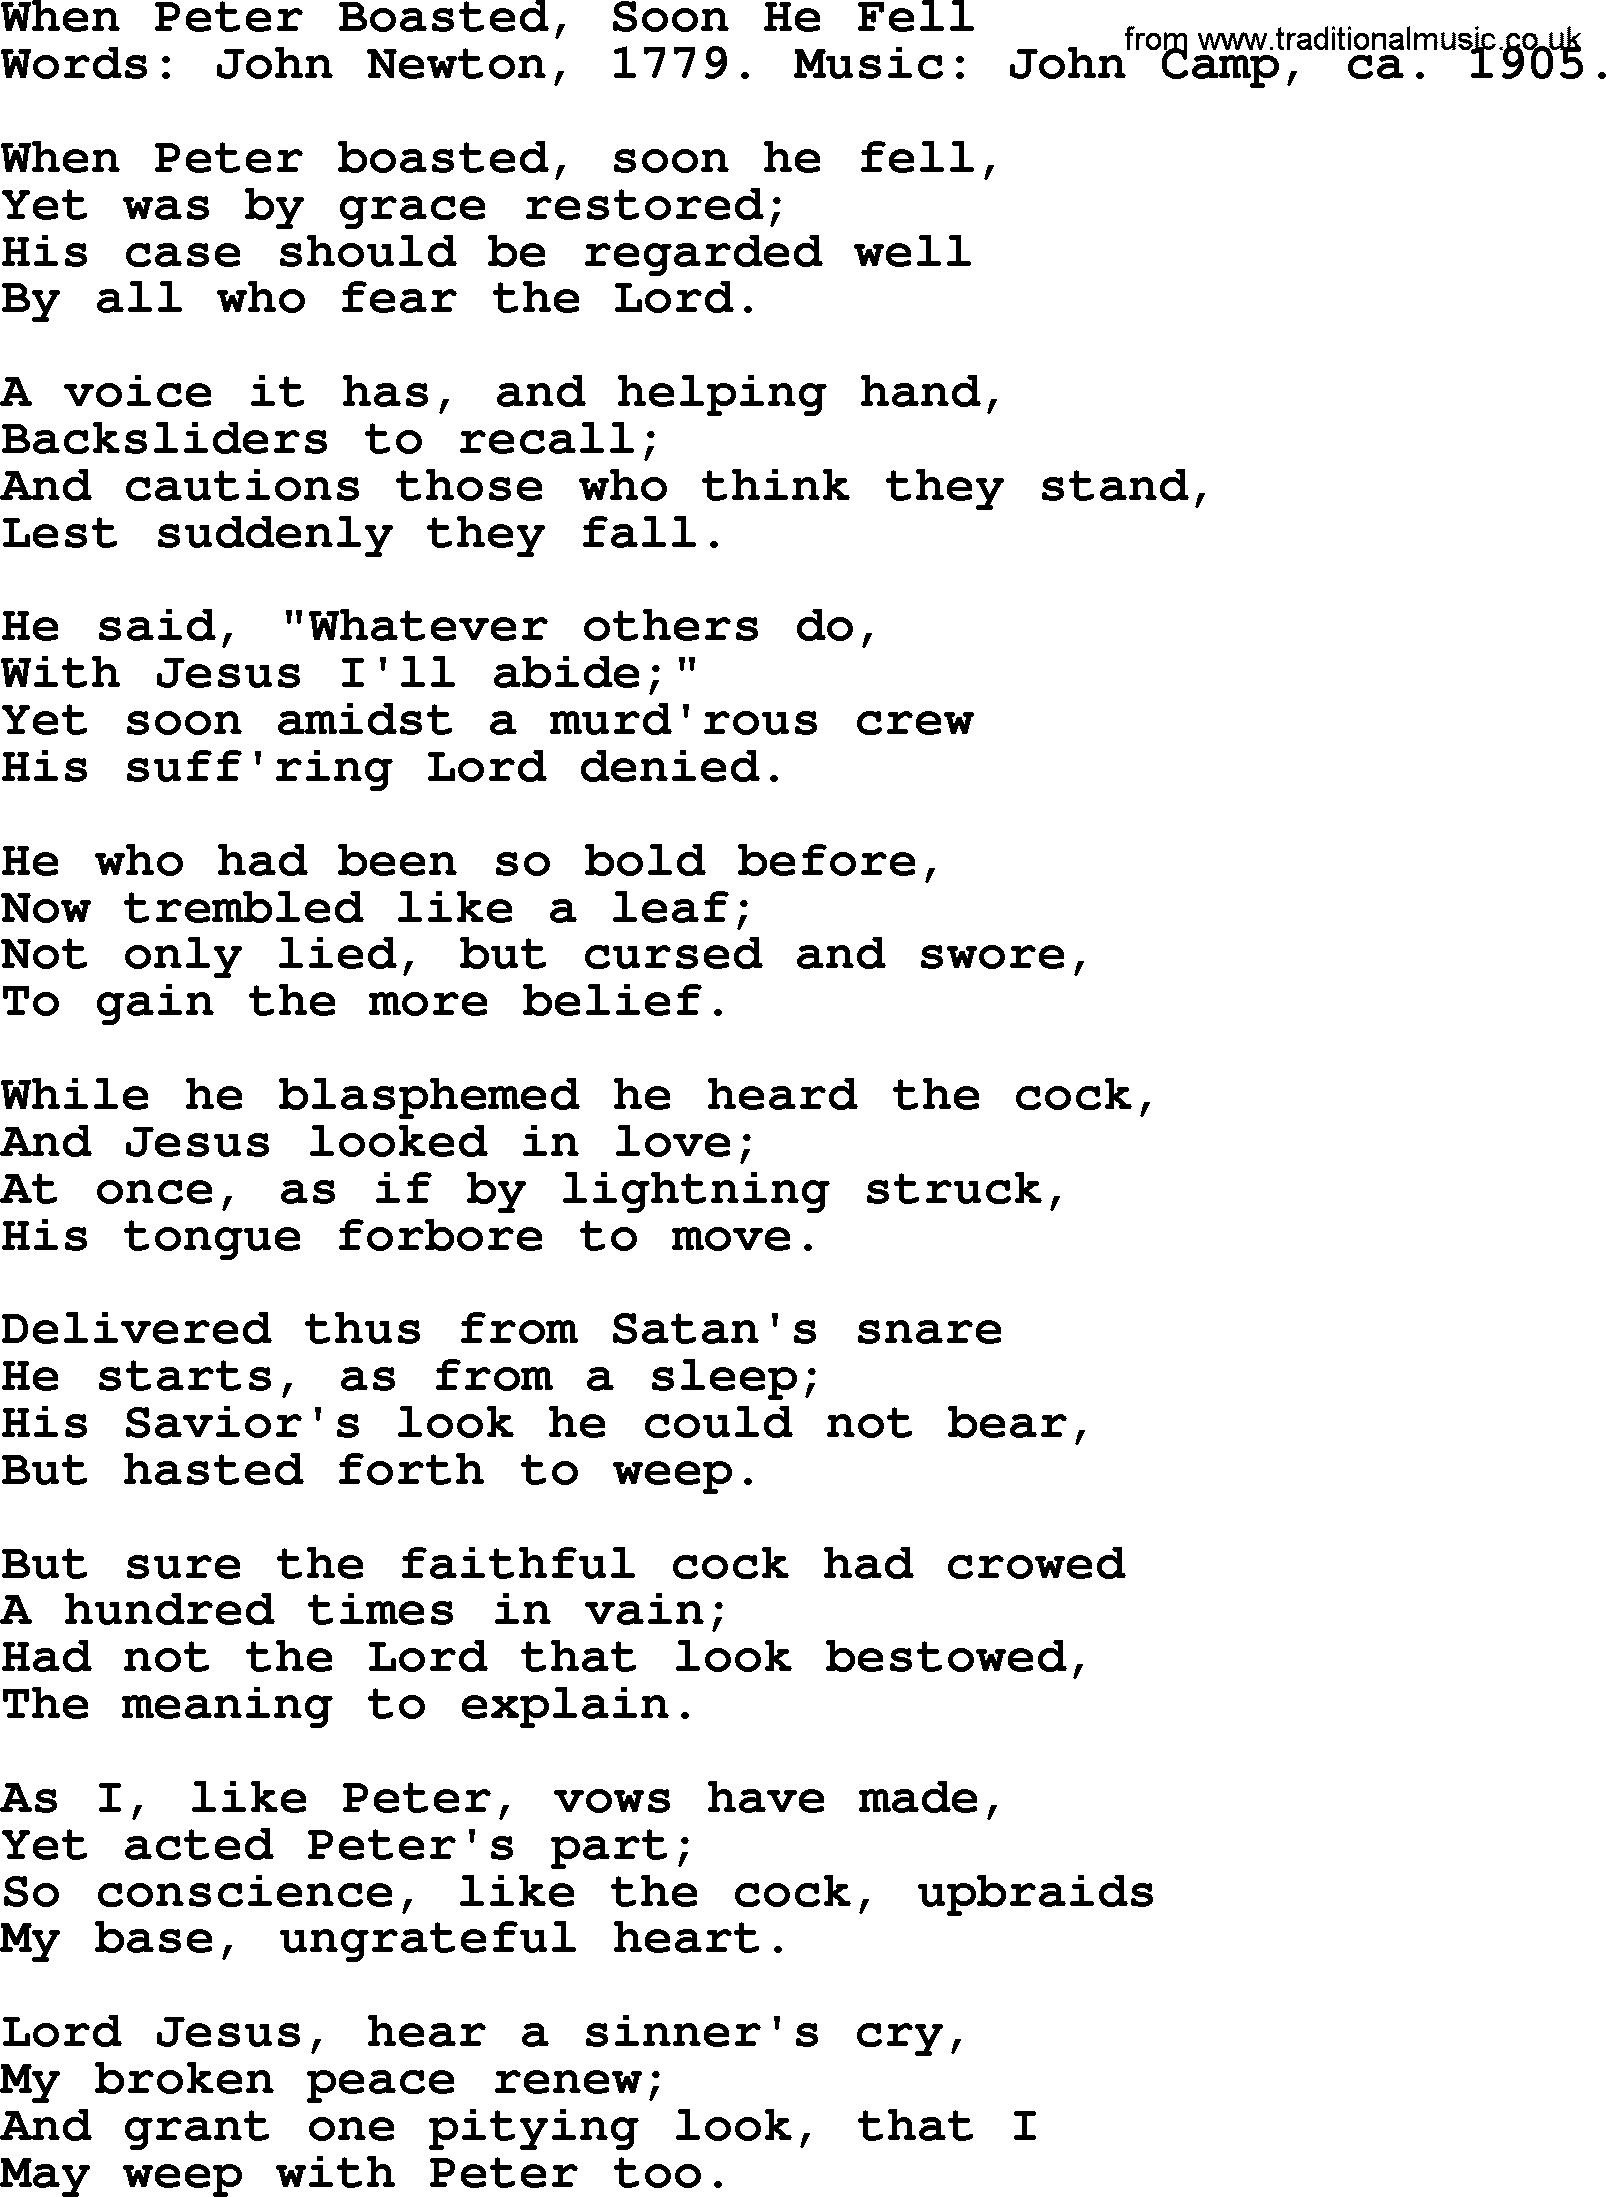 John Newton hymn: When Peter Boasted, Soon He Fell, lyrics